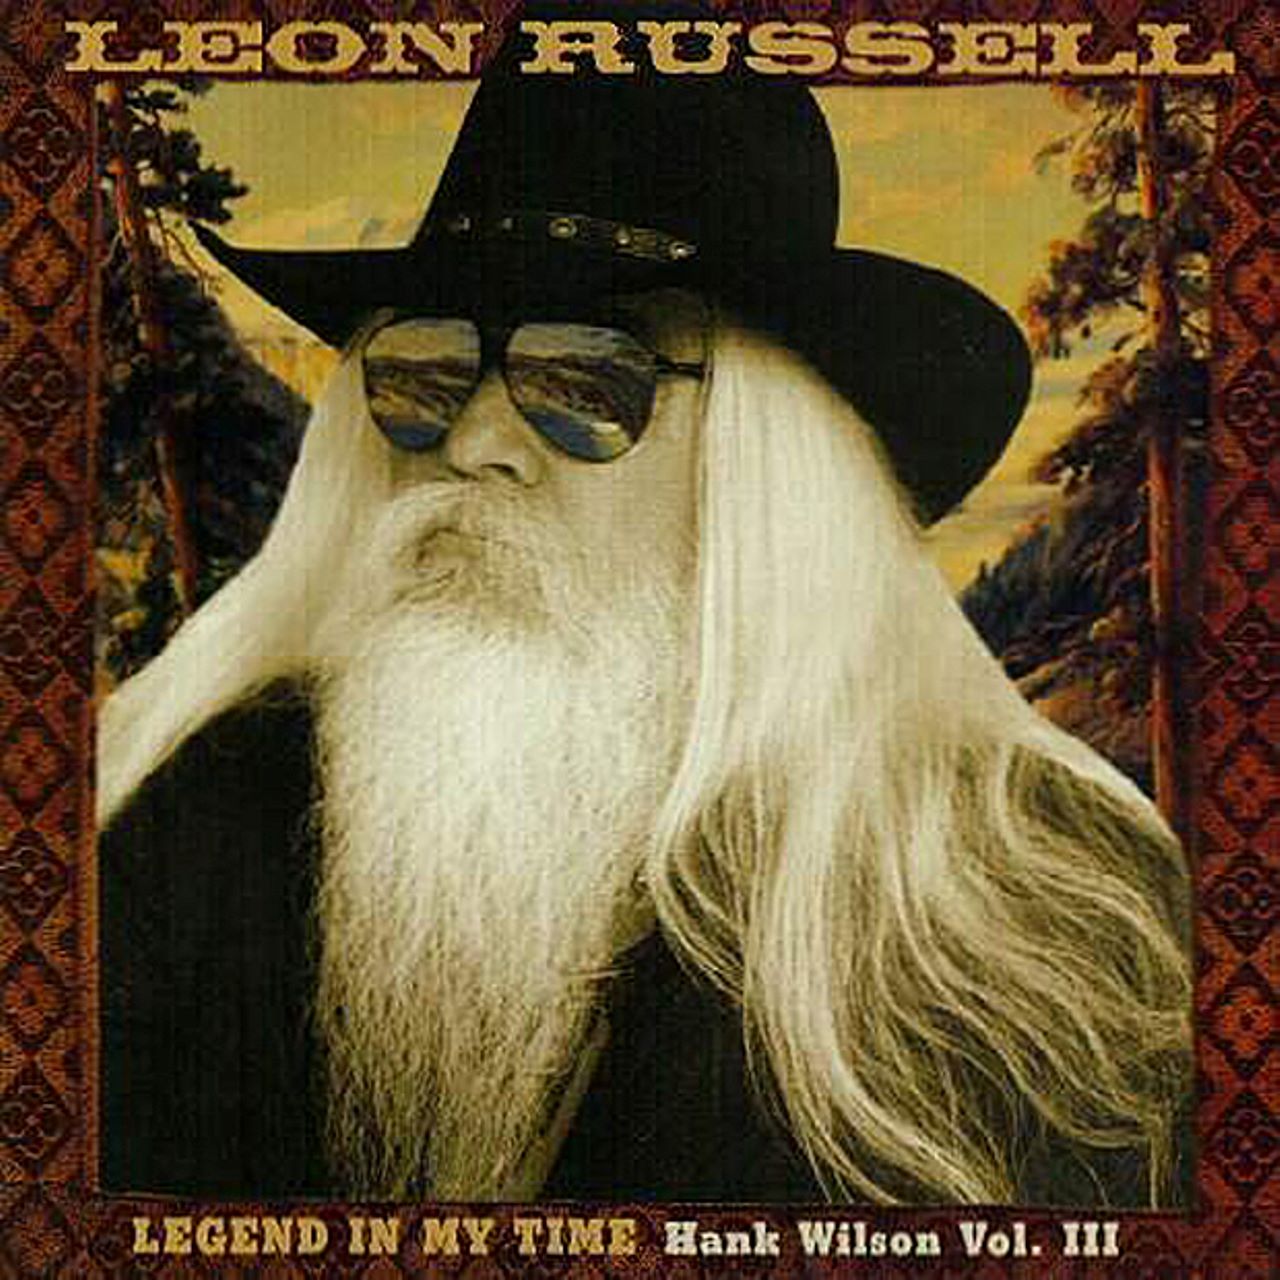 Leon Russell - Legend In My Time - Hank Wilson Vol. III cover album